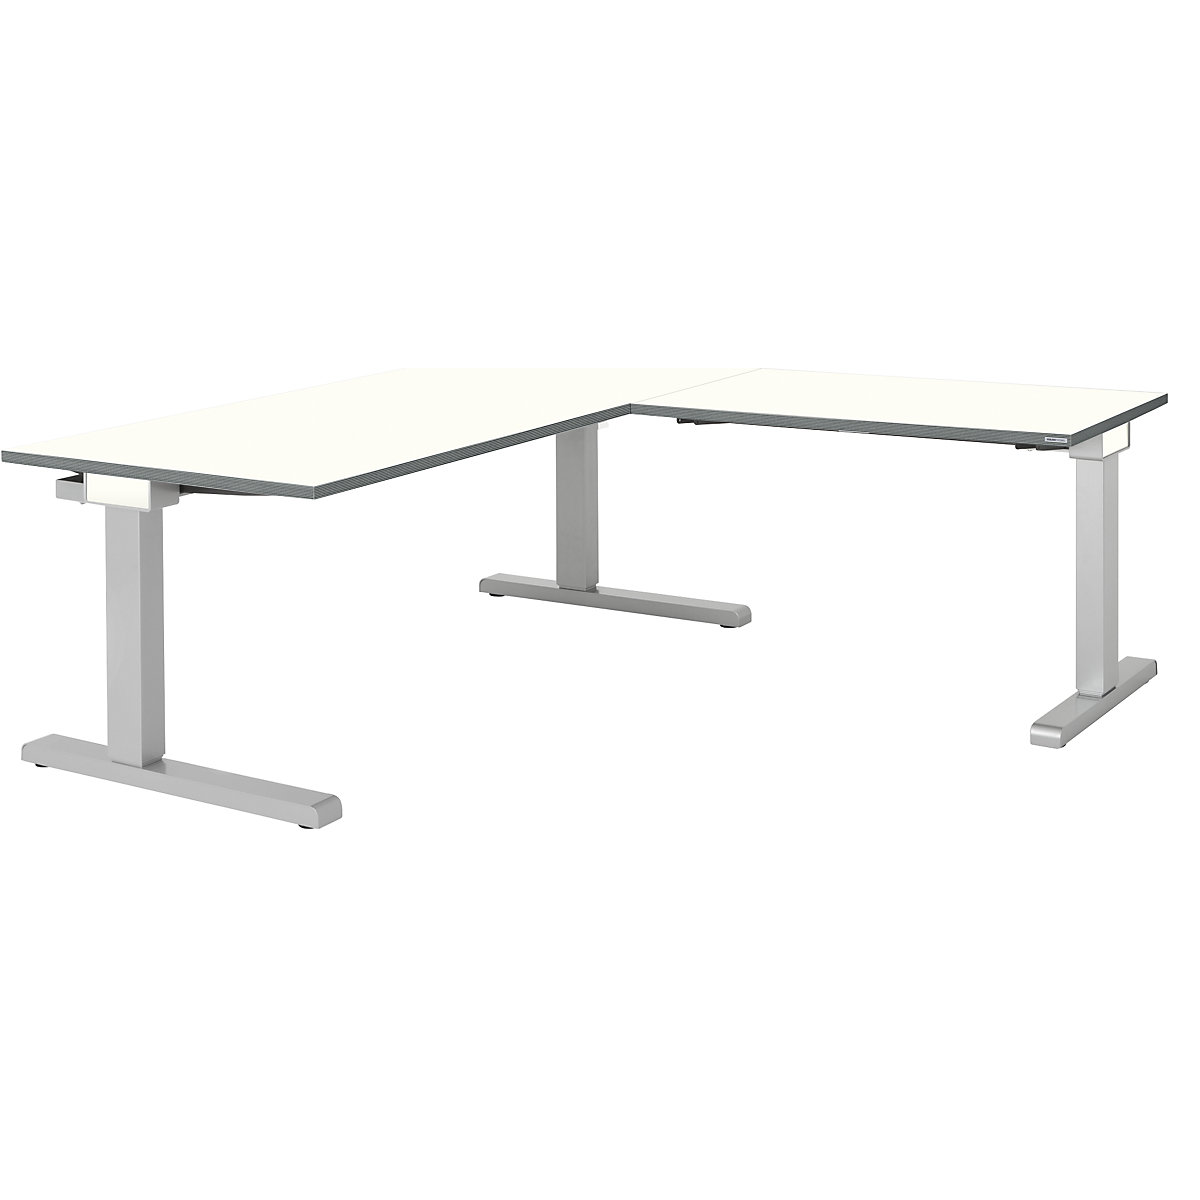 Pisalna miza, s priključkom – mauser, ŠxG 1600 x 800 mm, kotni element na desni strani (širina 1000 mm), plošča bele barve, ogrodje aluminijasto srebrne barve-3